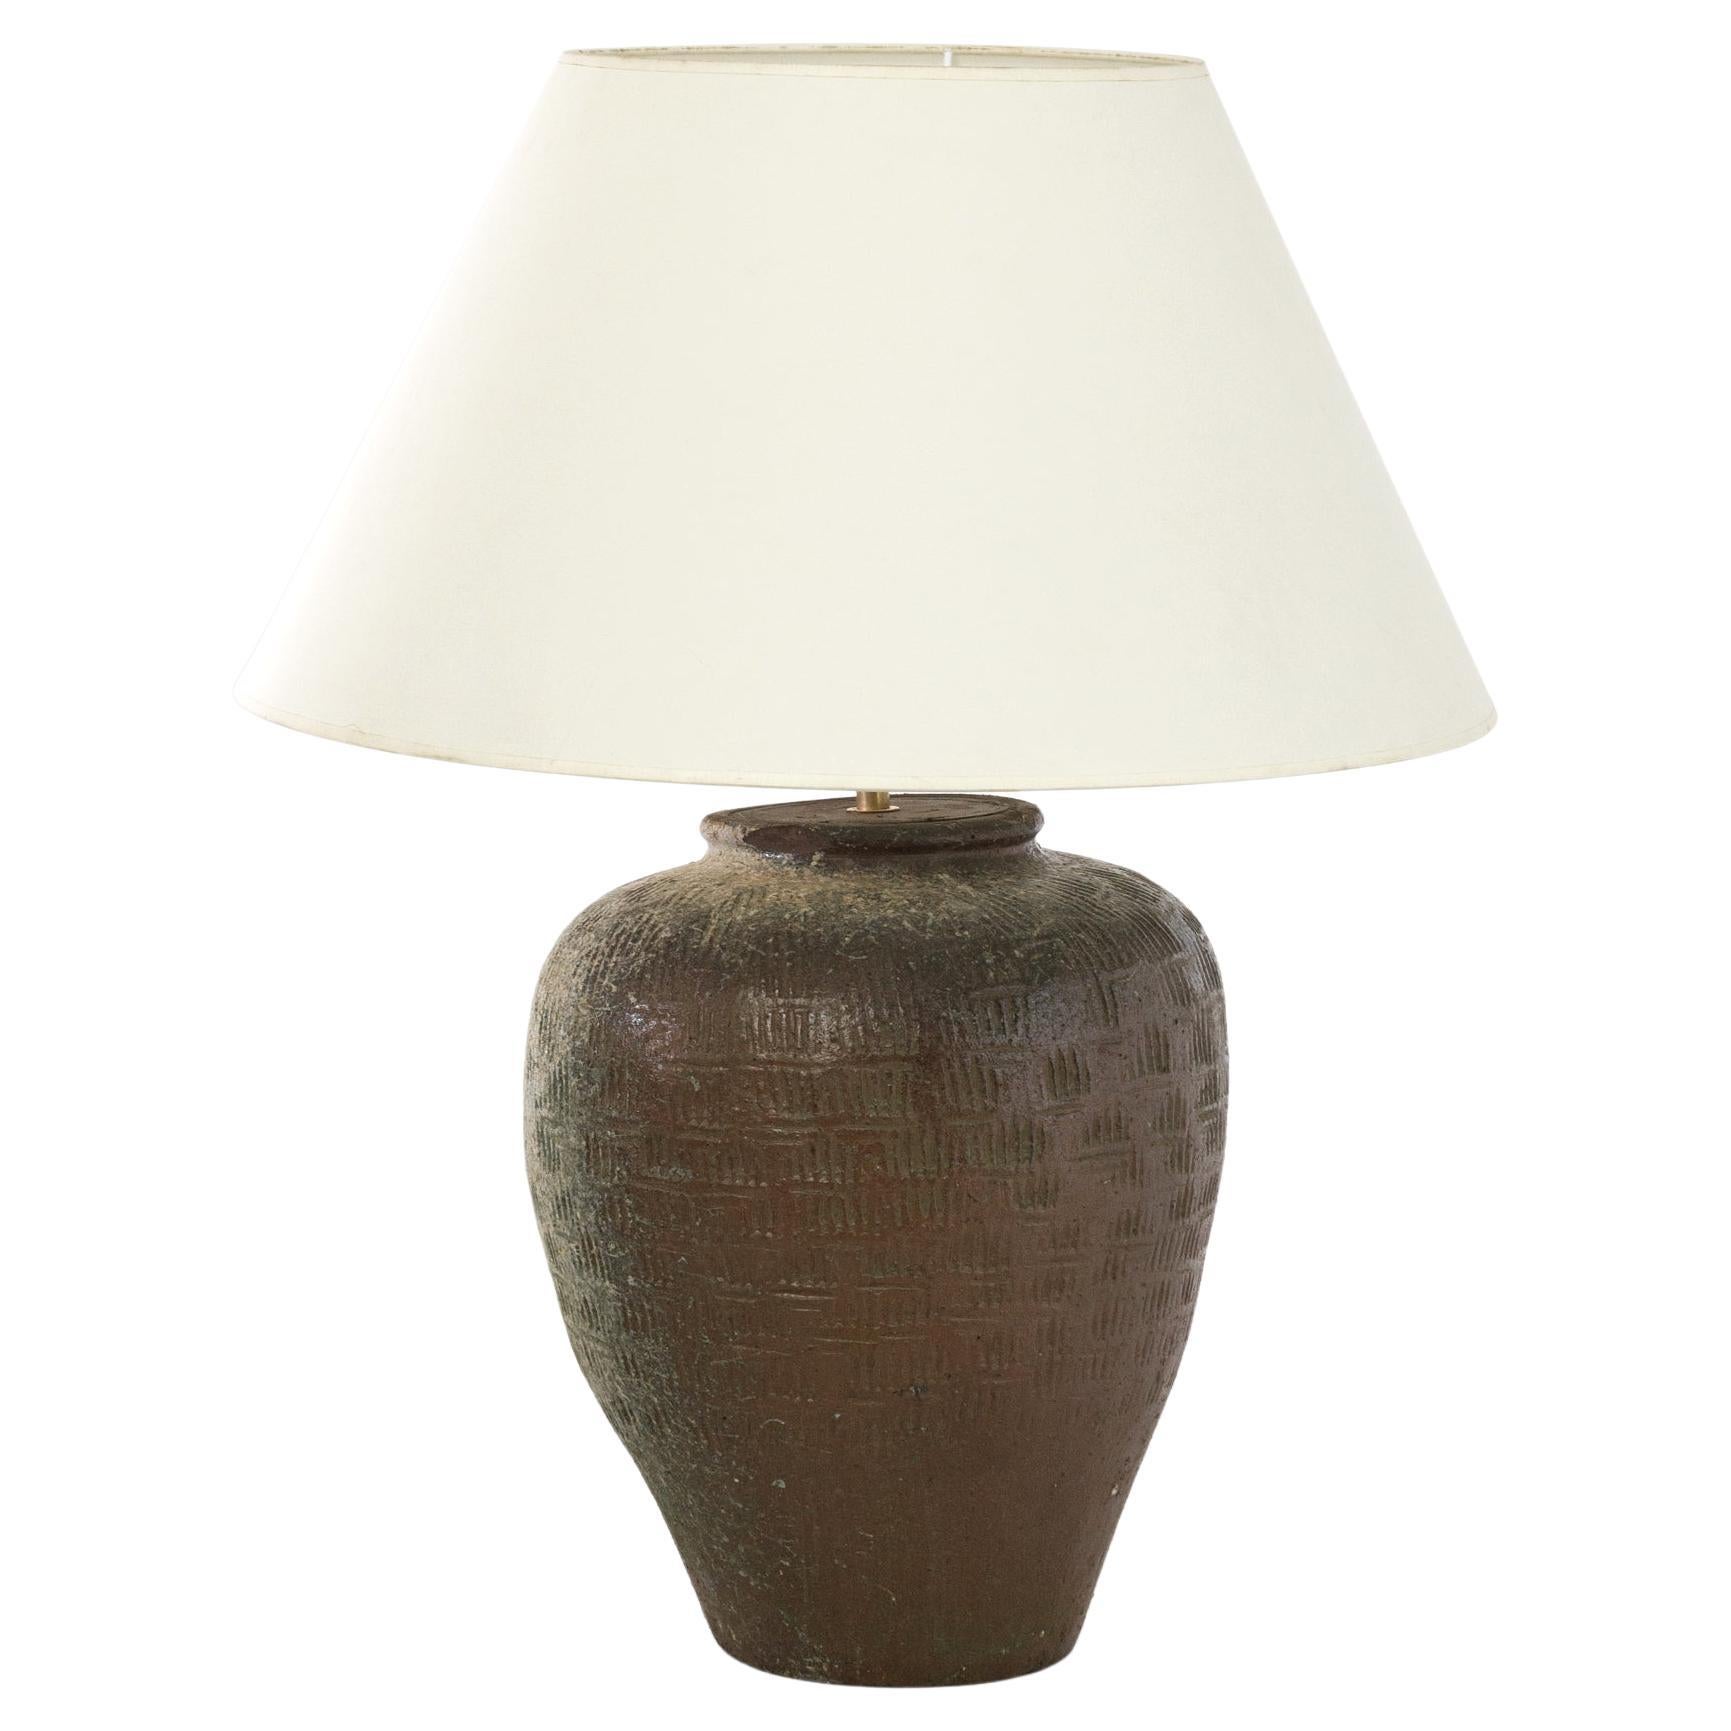 Vintage Chinese Ceramic Vase Table Lamp